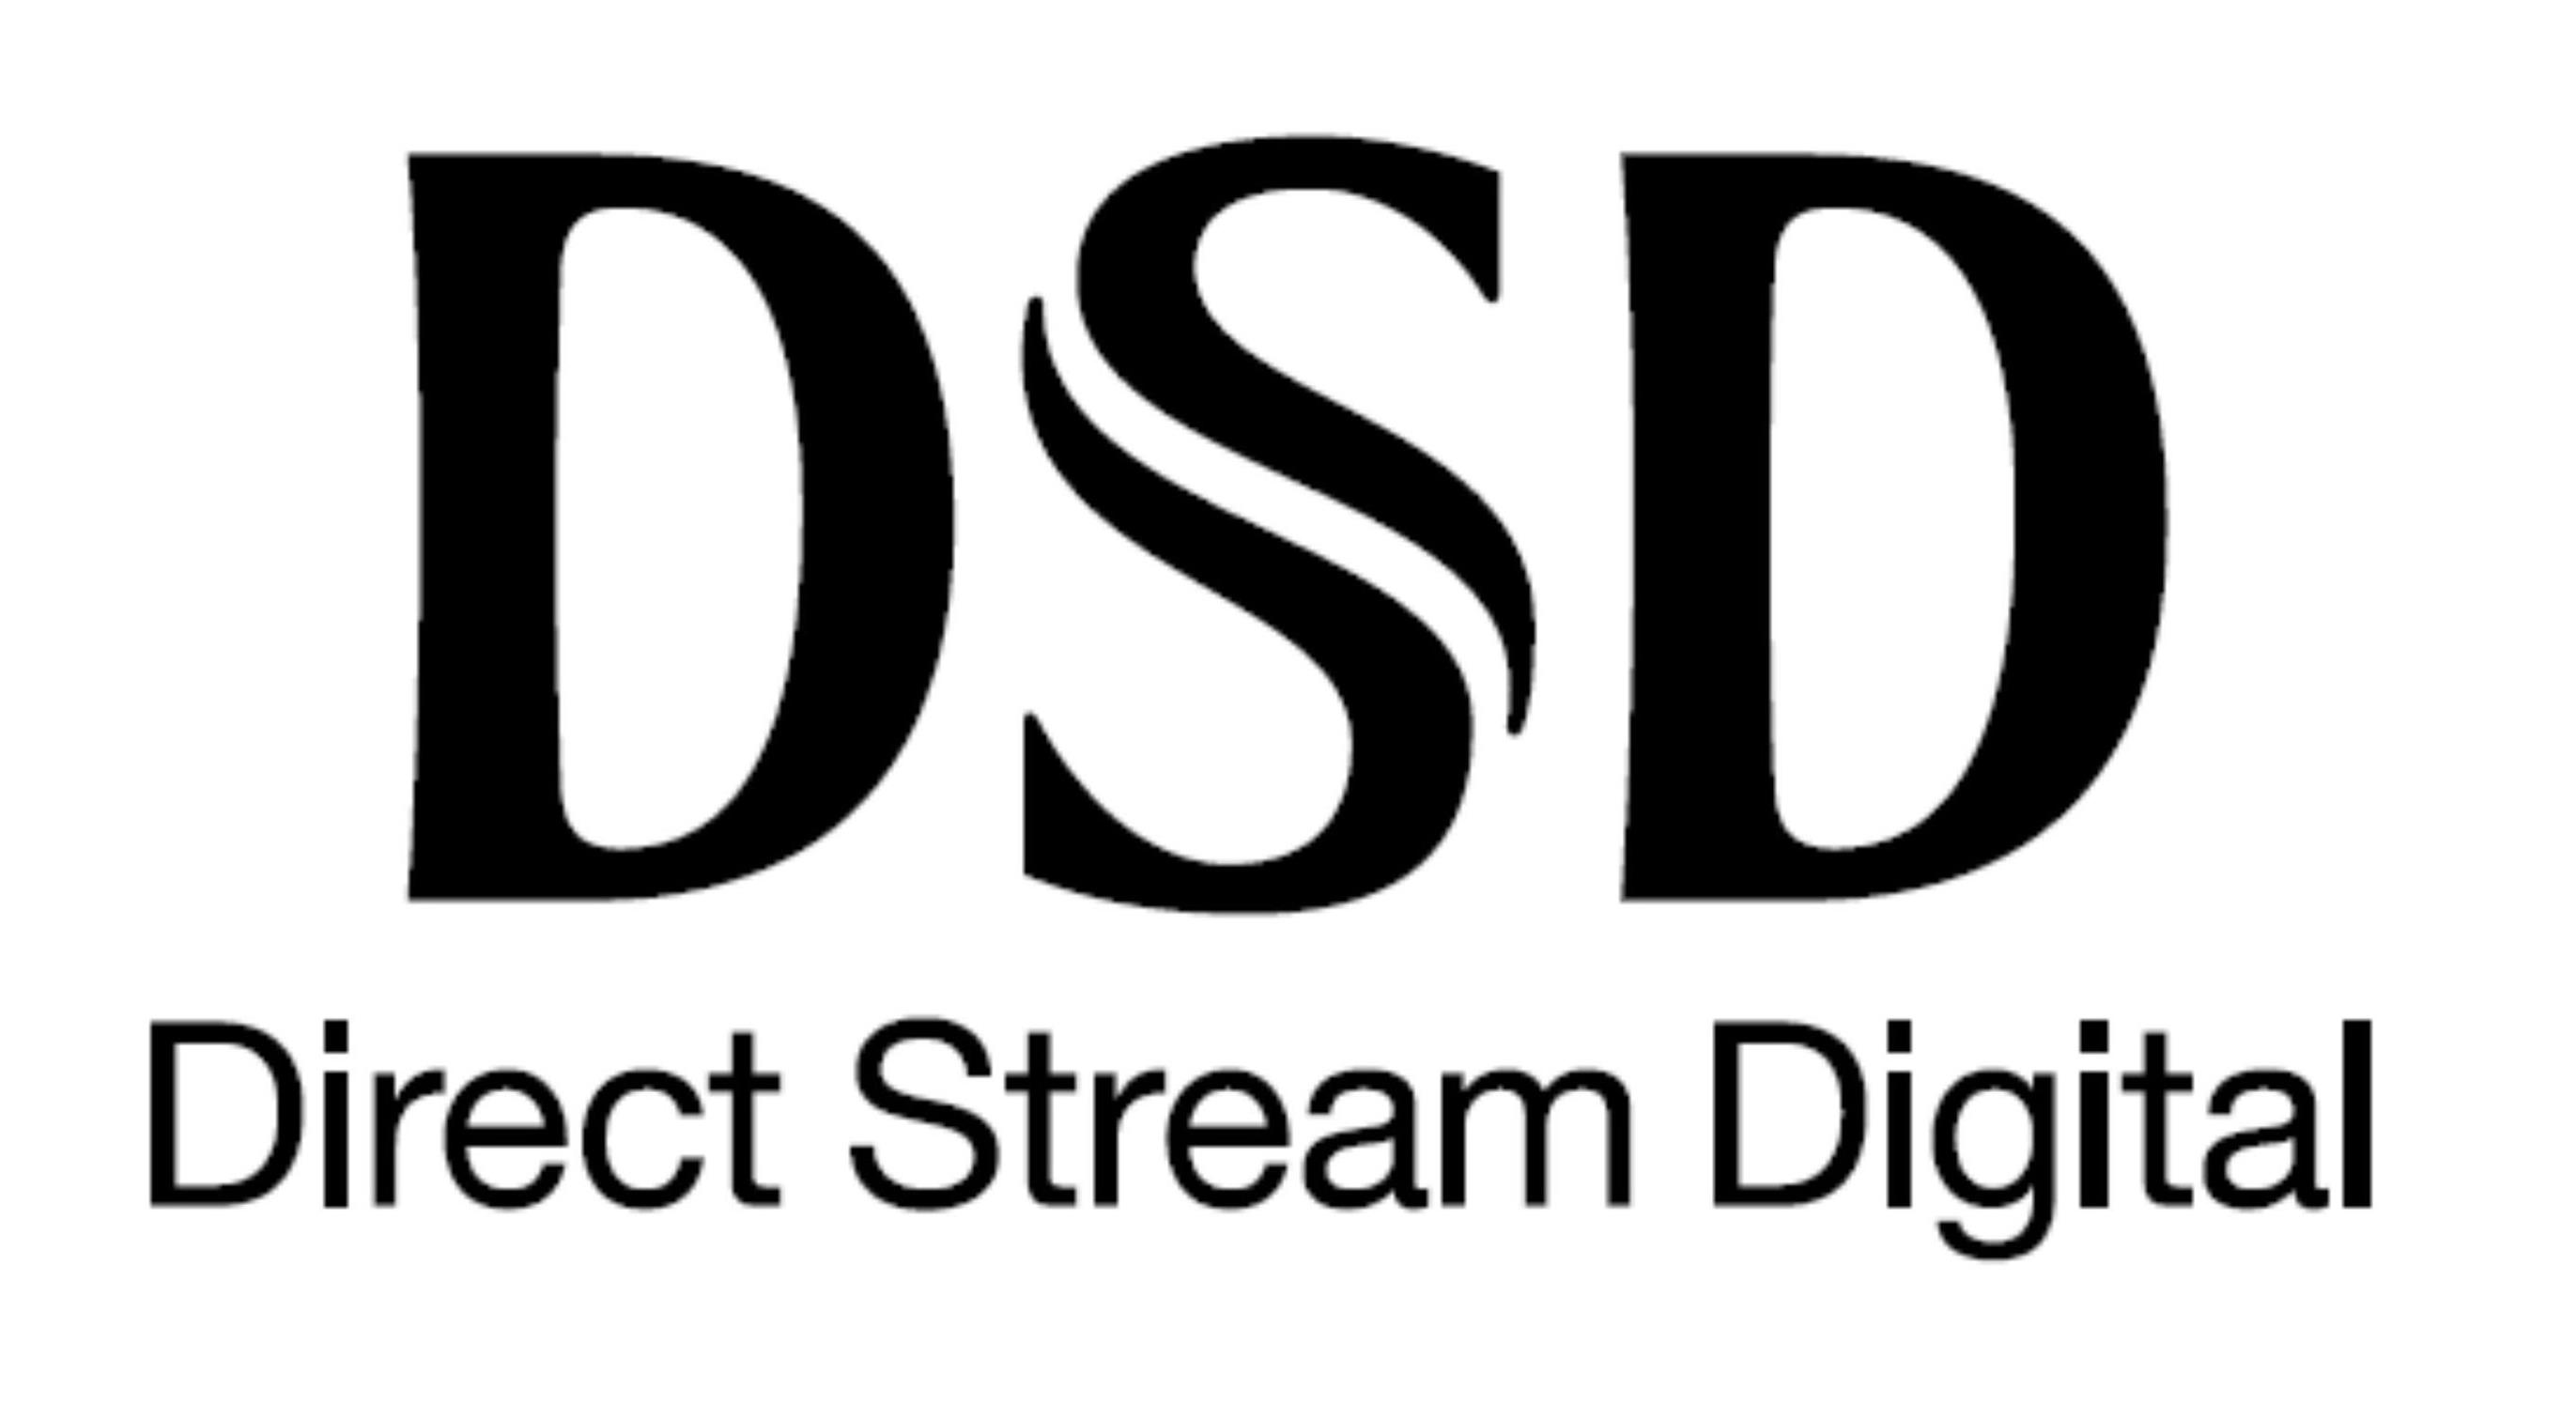  DSD DIRECT STREAM DIGITAL